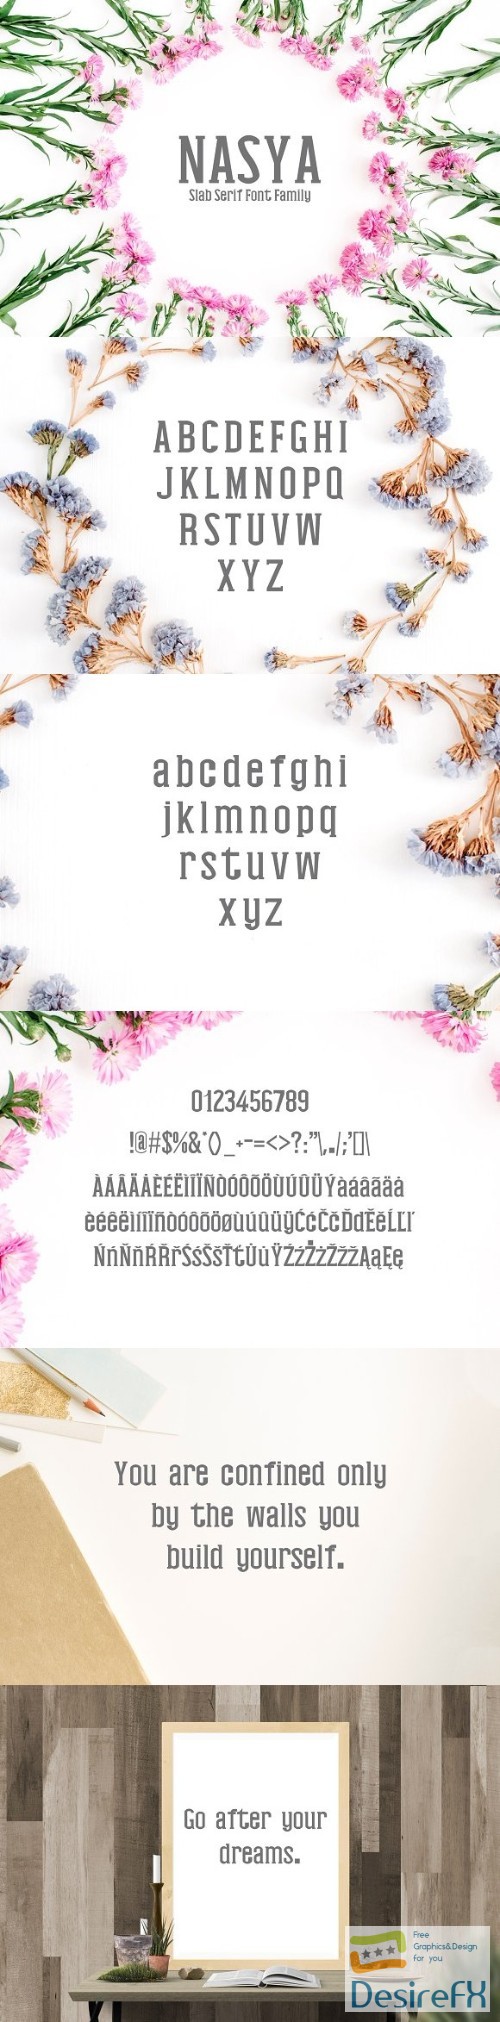 Nasya Slab Serif 4 Font Family Pack 2334077